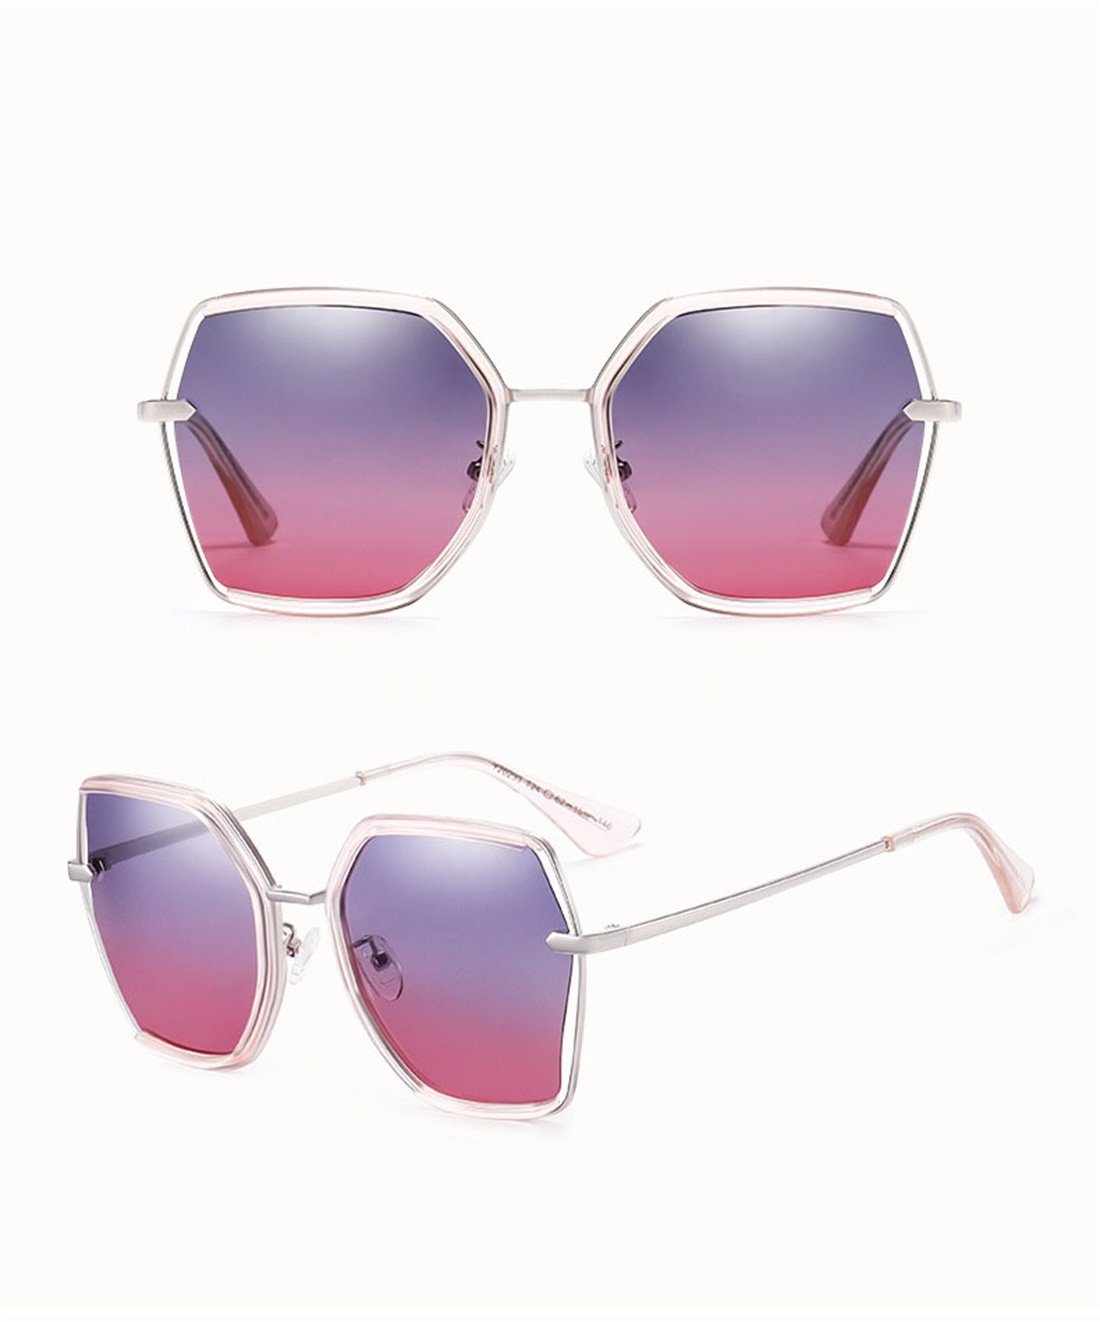 Sonnenbrille DÖRÖY Sonnenbrille Sonnenbrille, Braun Damen Sonnenschirme polarisierte Mode Box